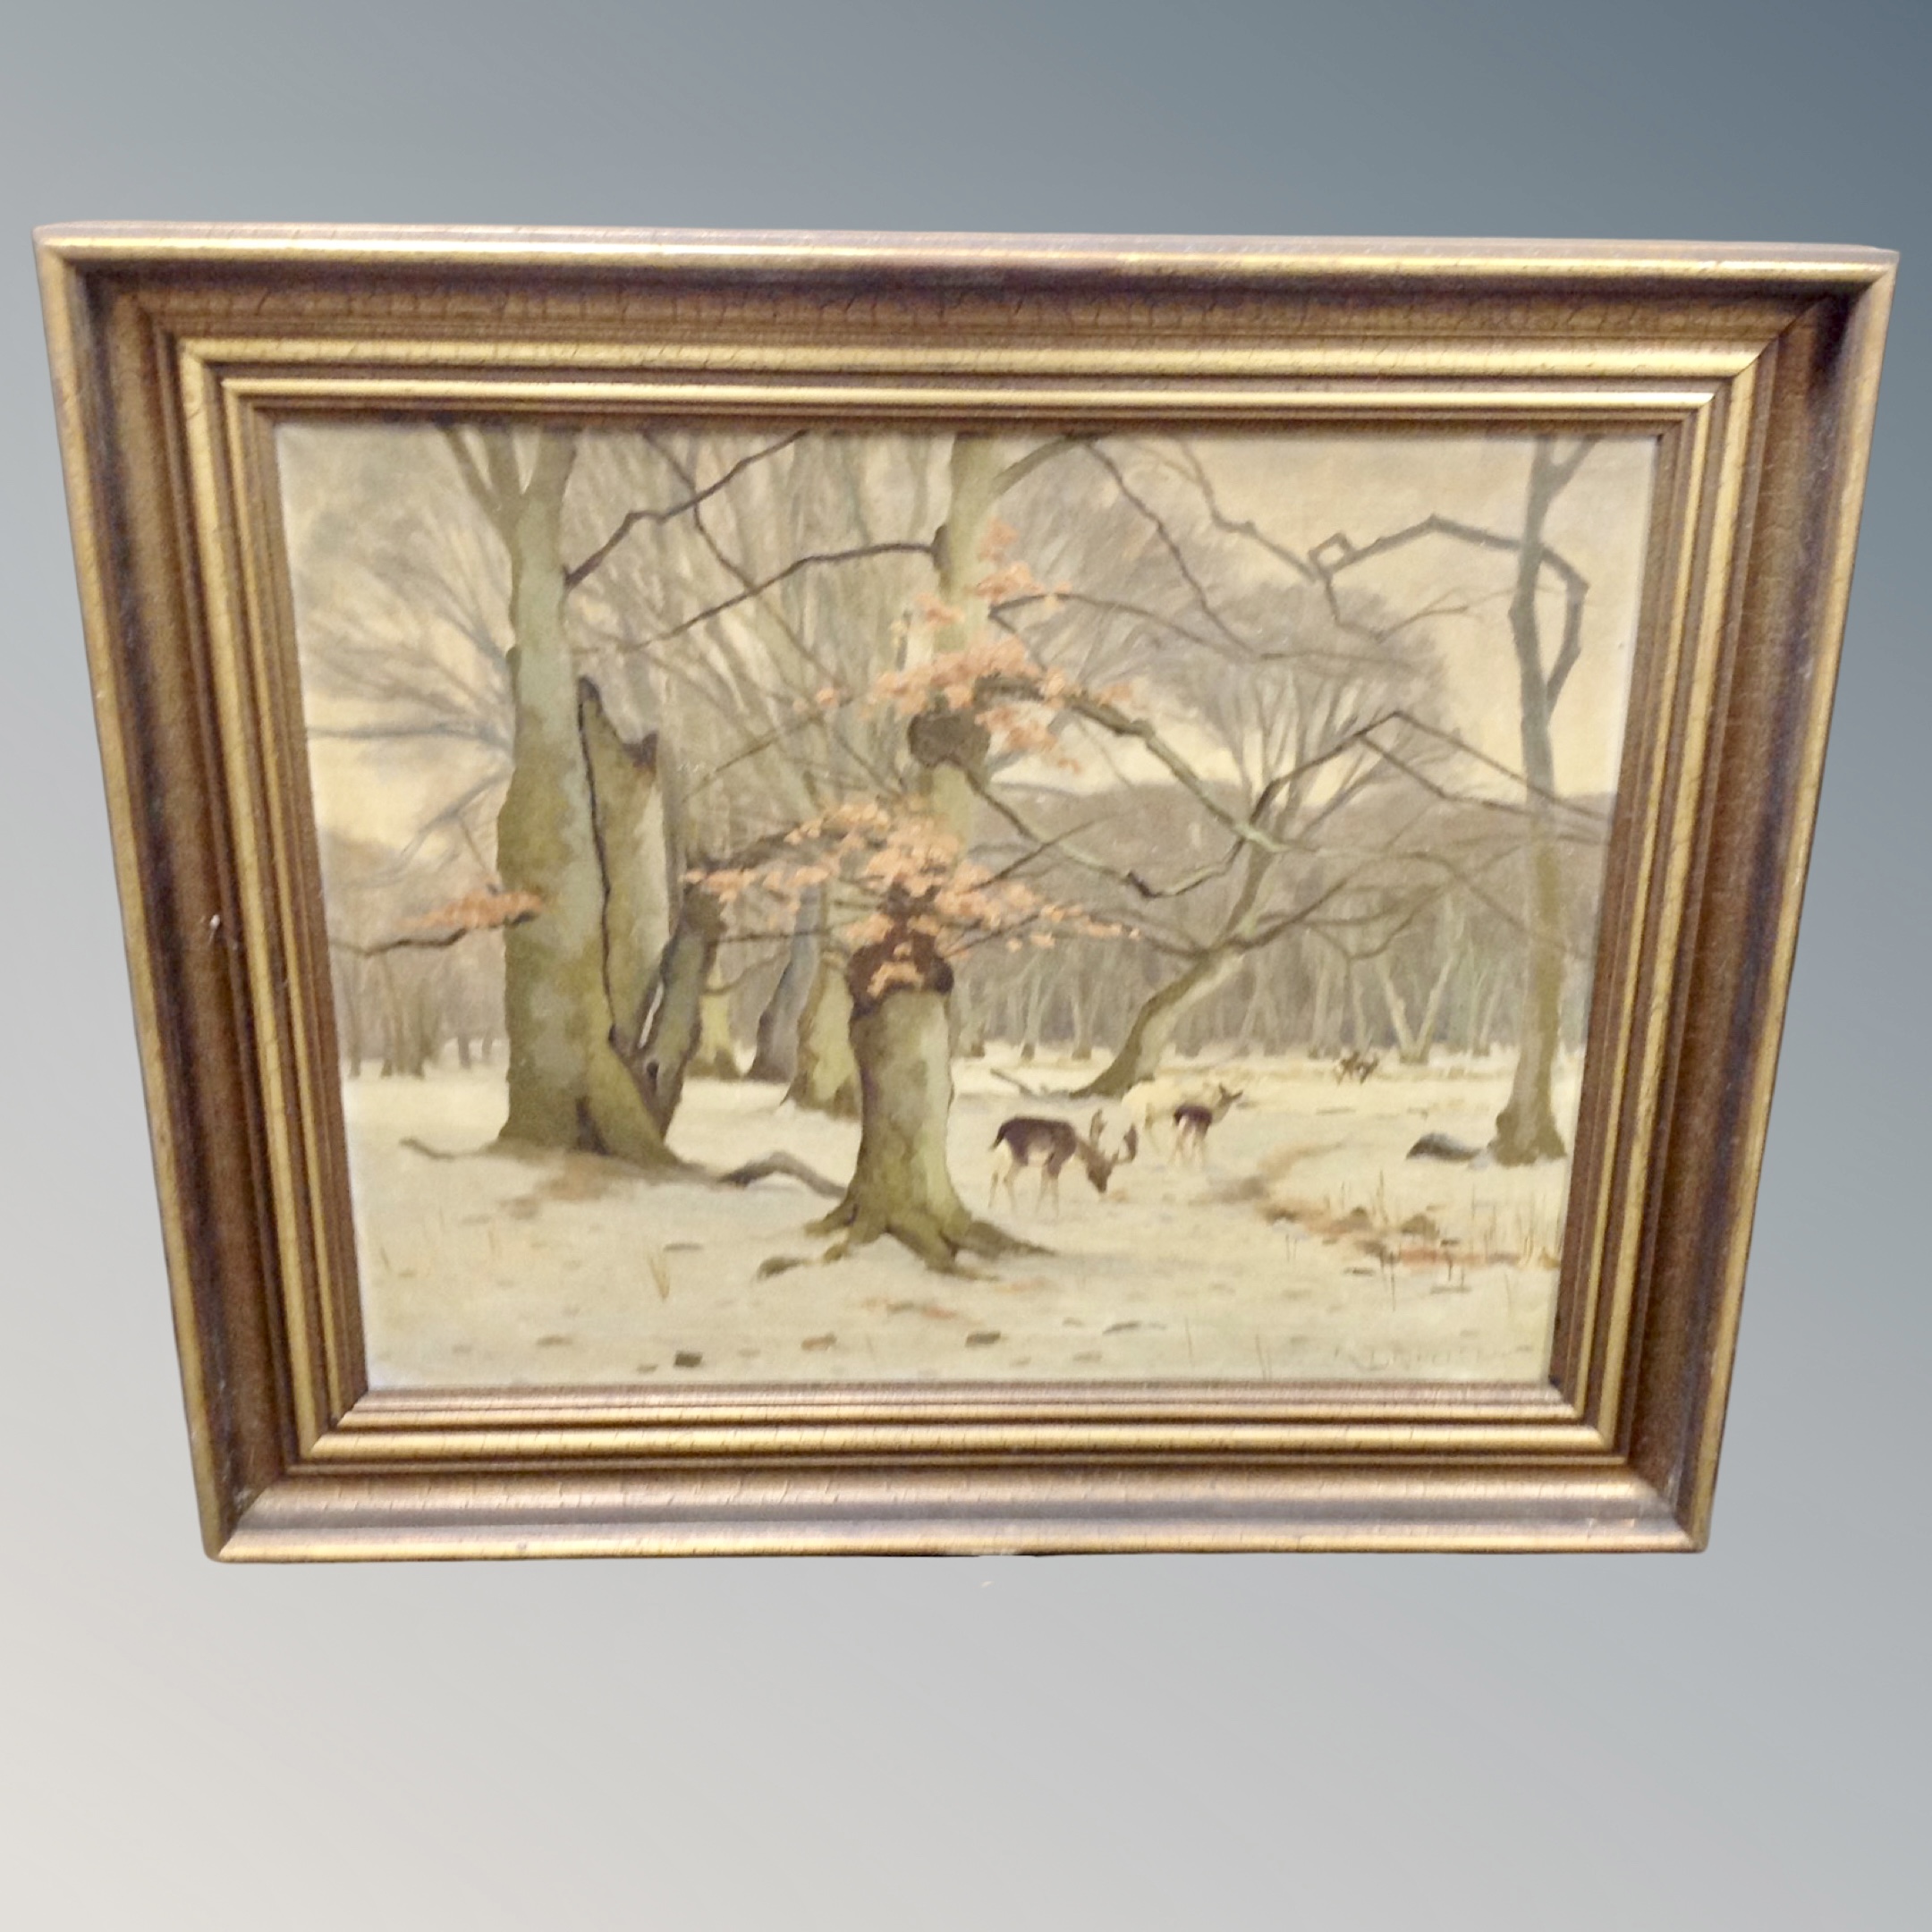 A Danielsen : Deer in a wooded landscape, oil on canvas, signed,